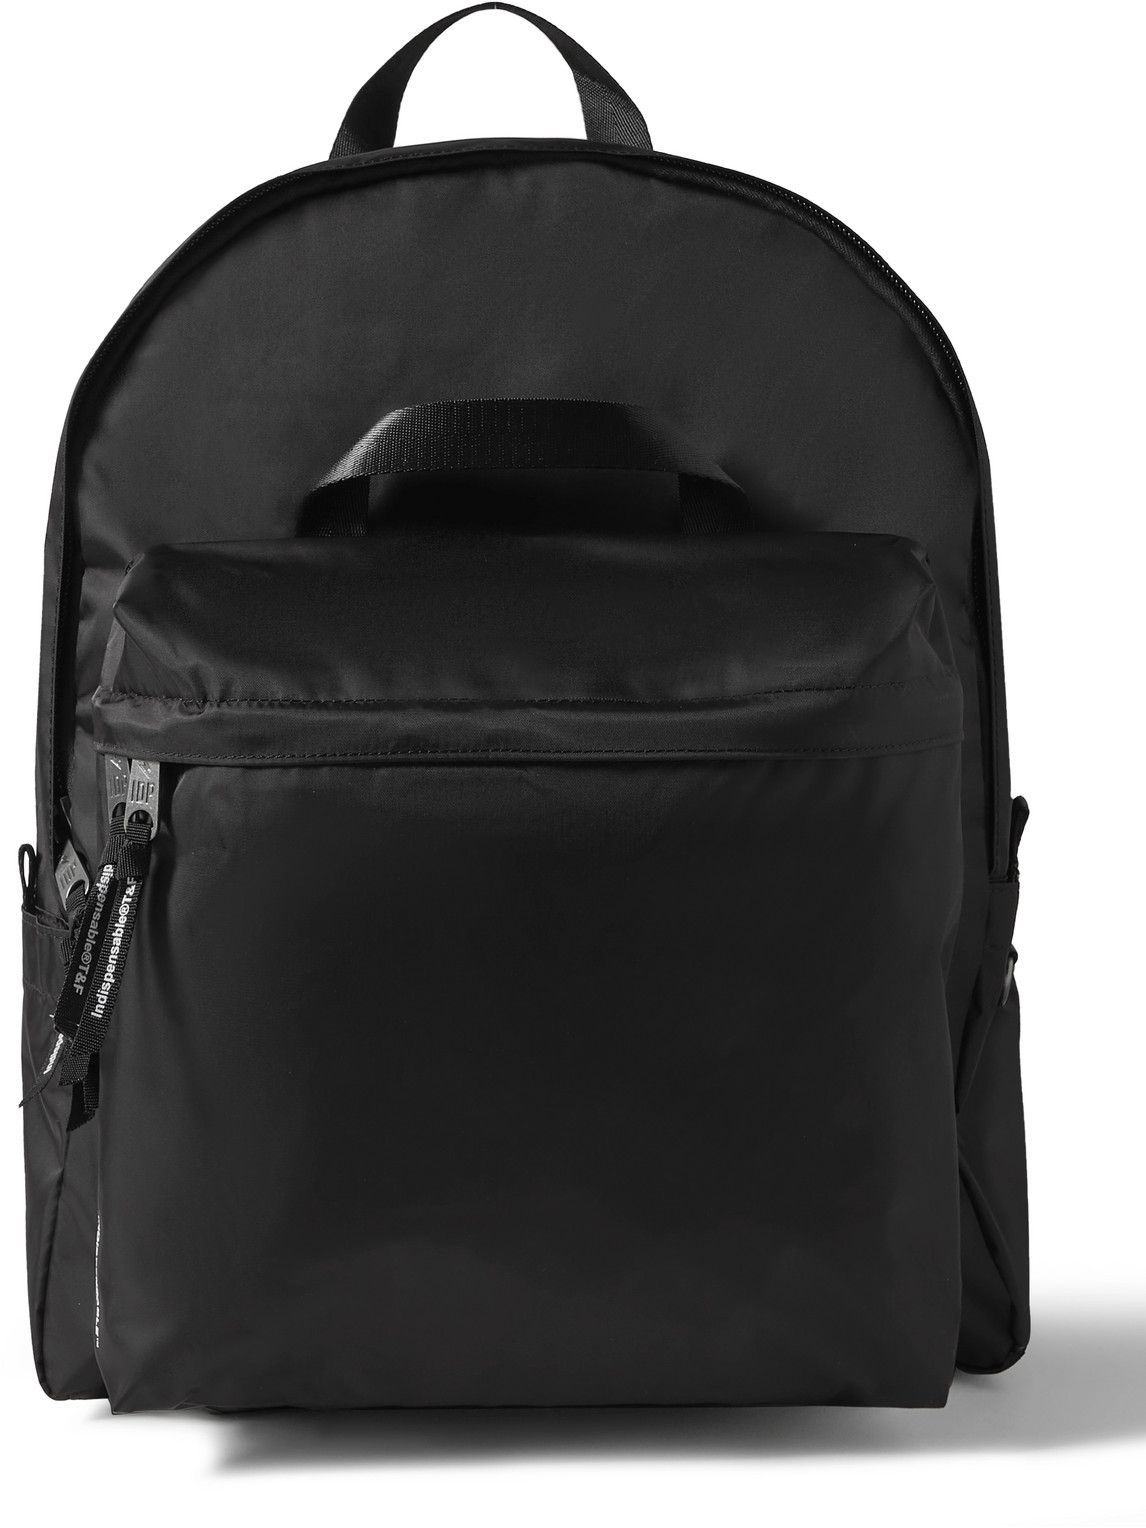 Photo: Indispensable - ECONYL Backpack